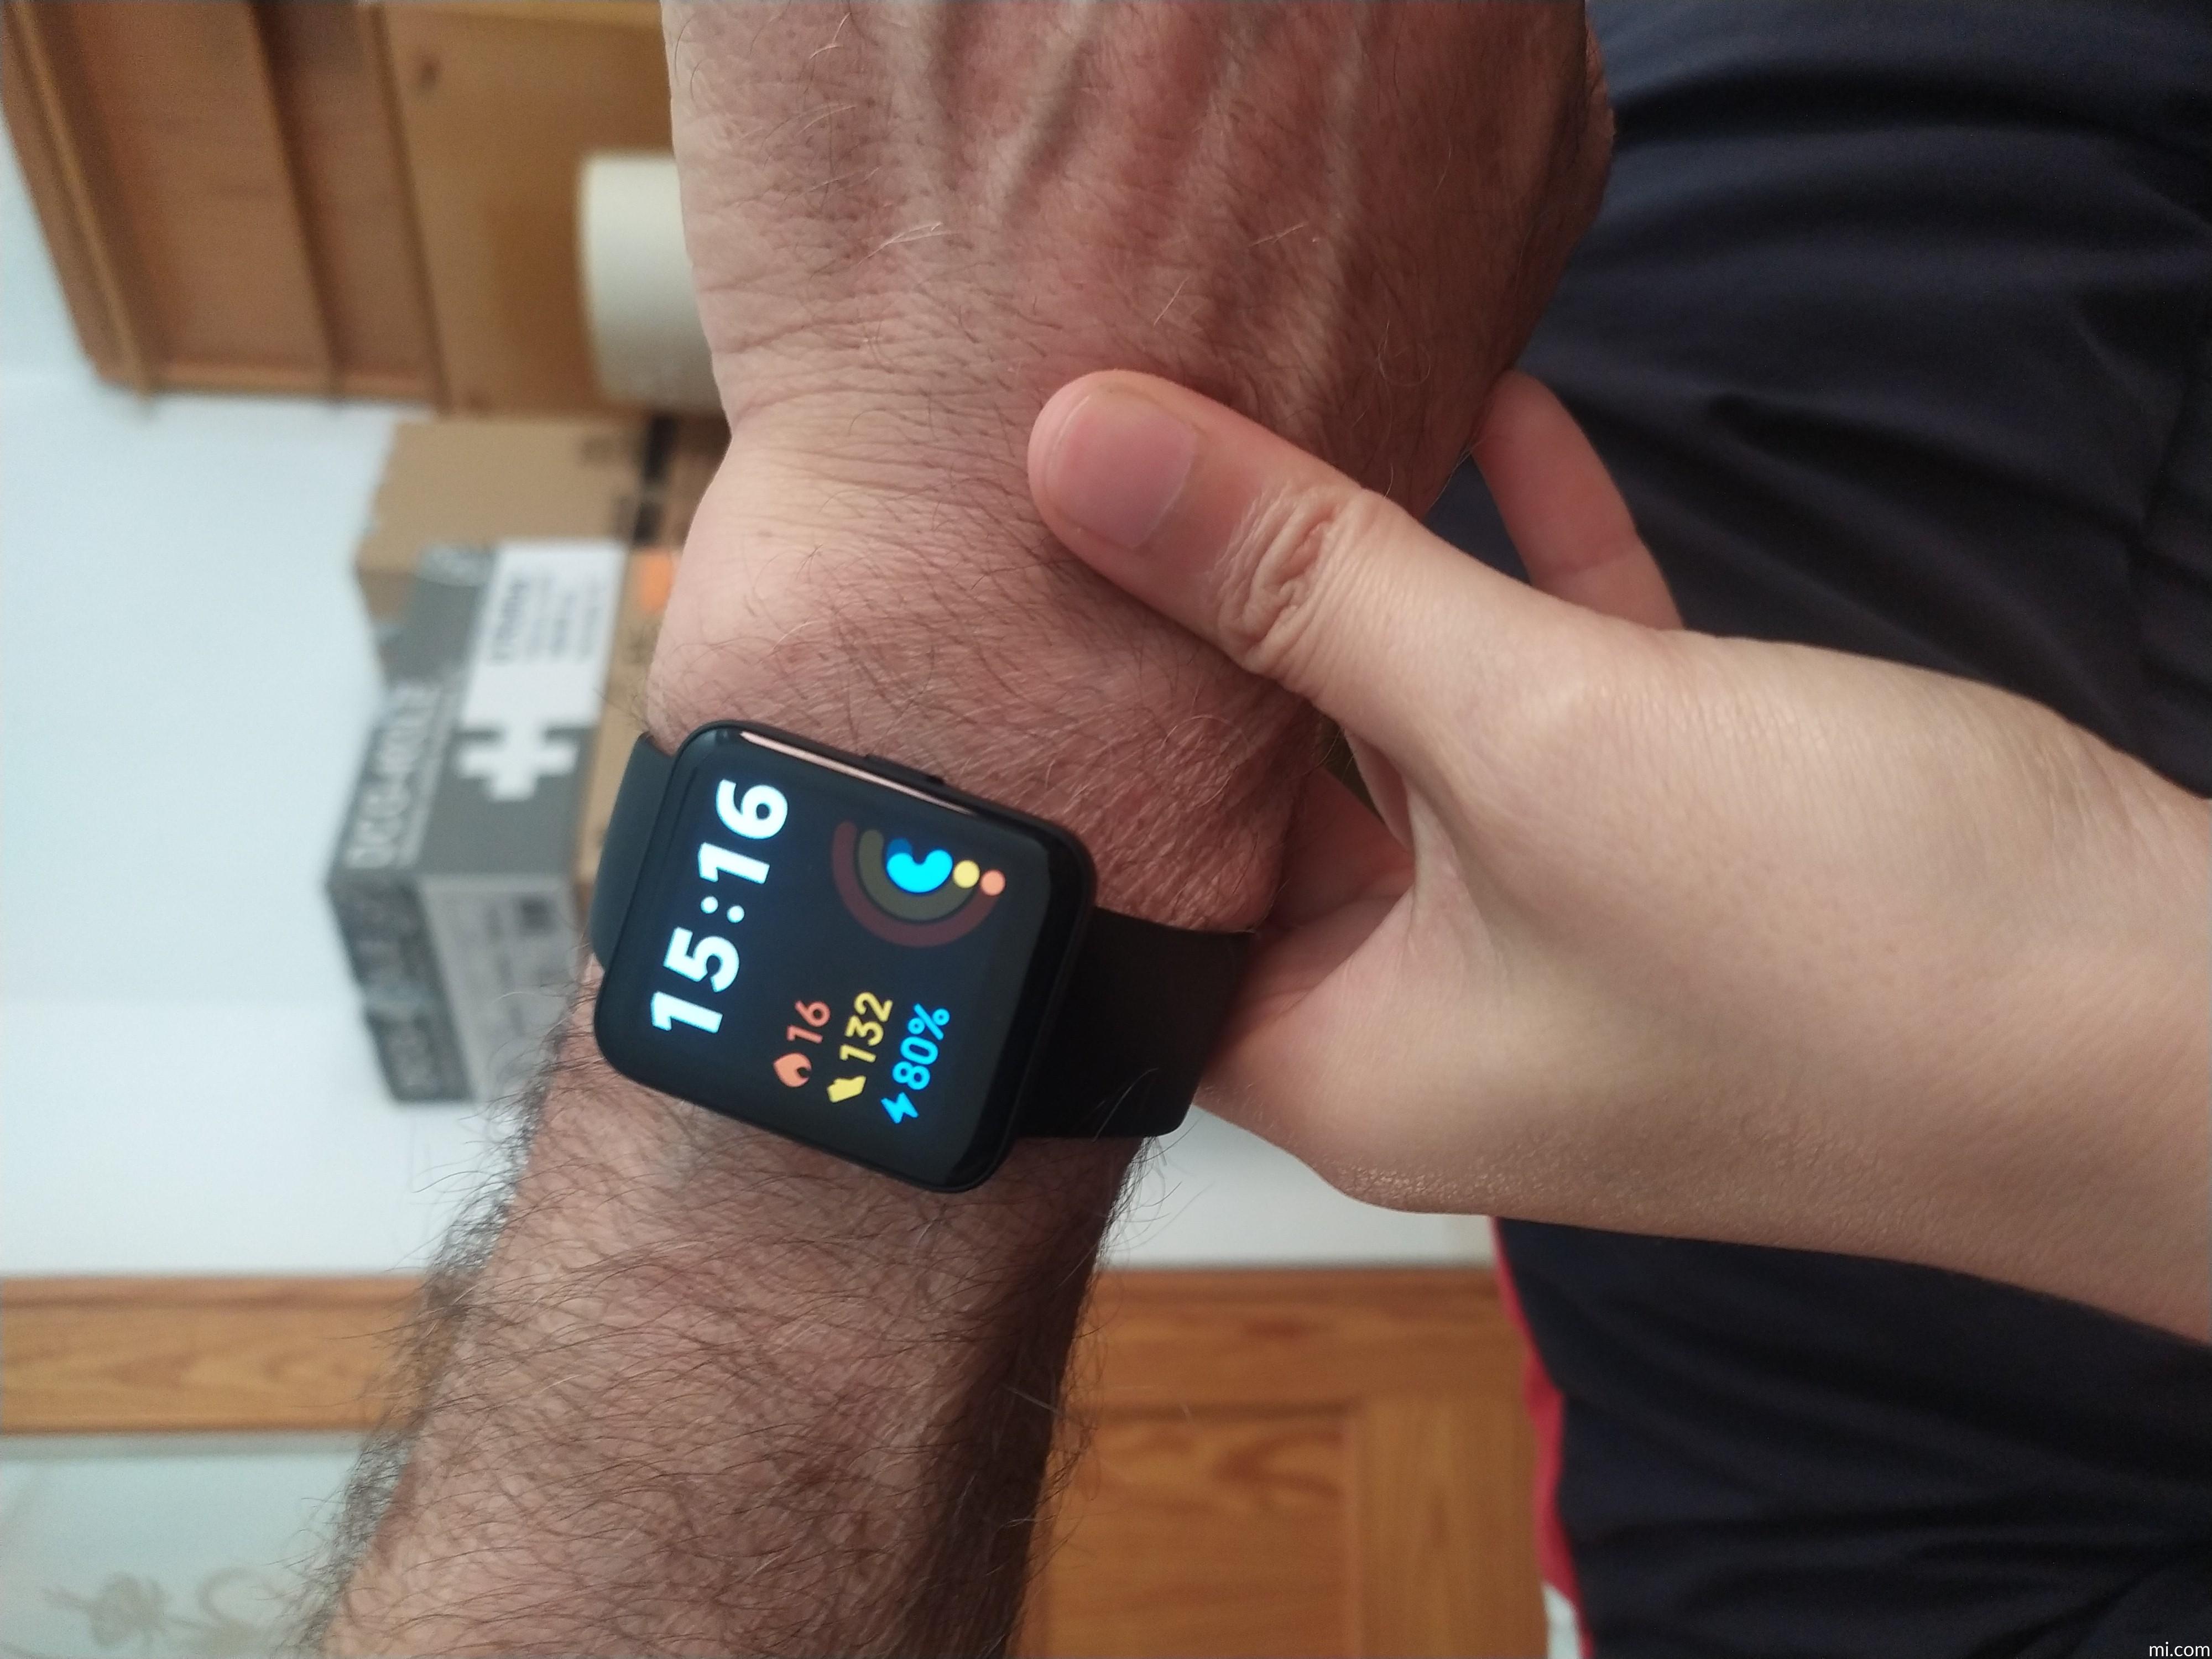 Mi Watch Lite丨Xiaomi España丨 - España